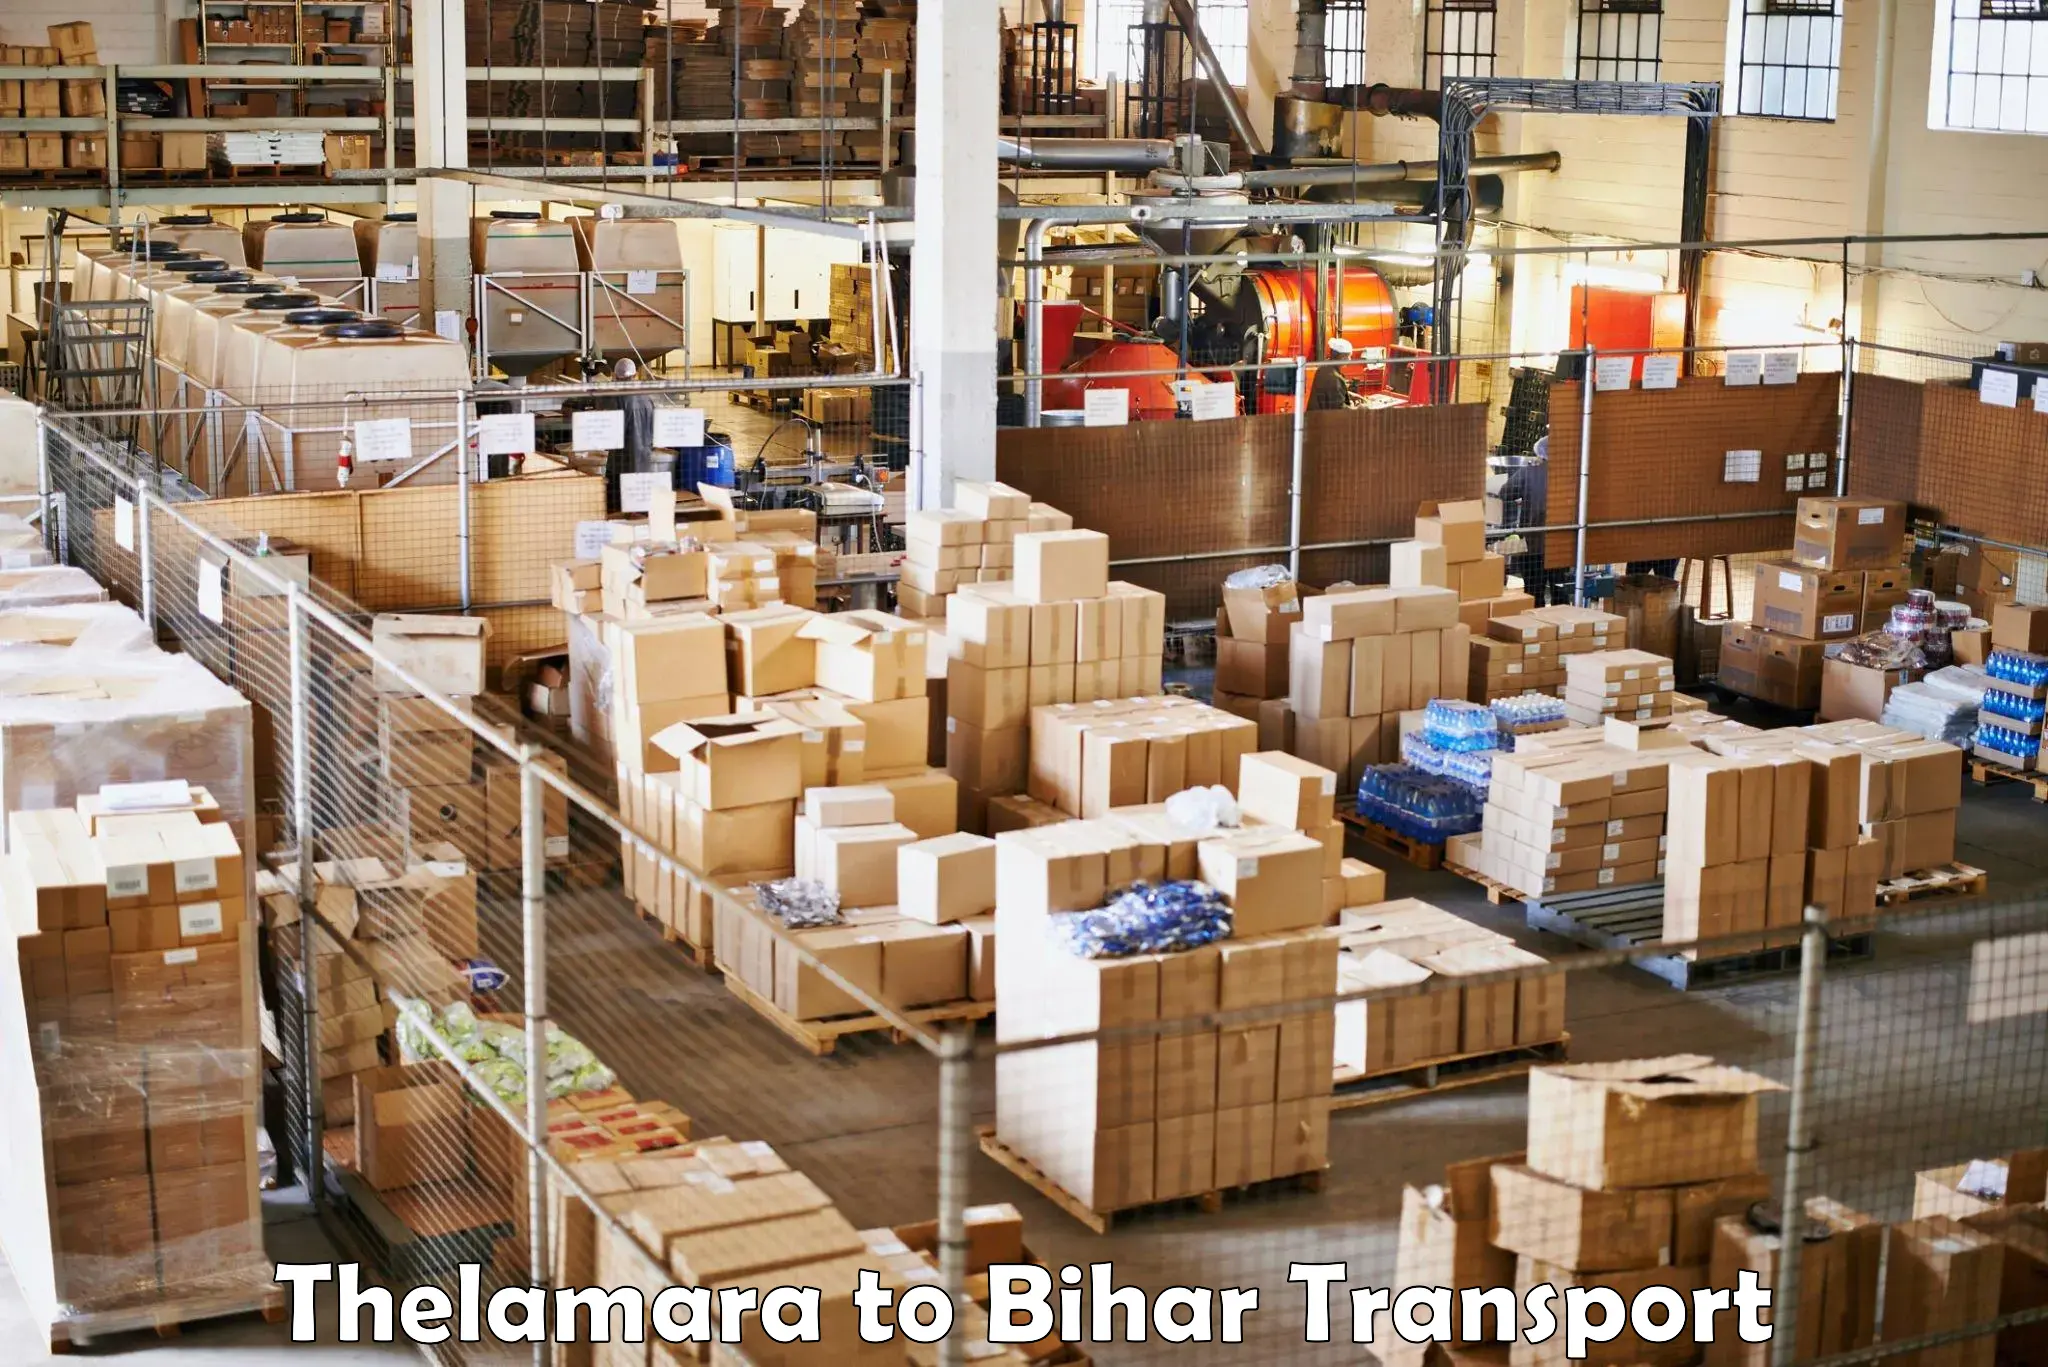 Furniture transport service Thelamara to Bihar